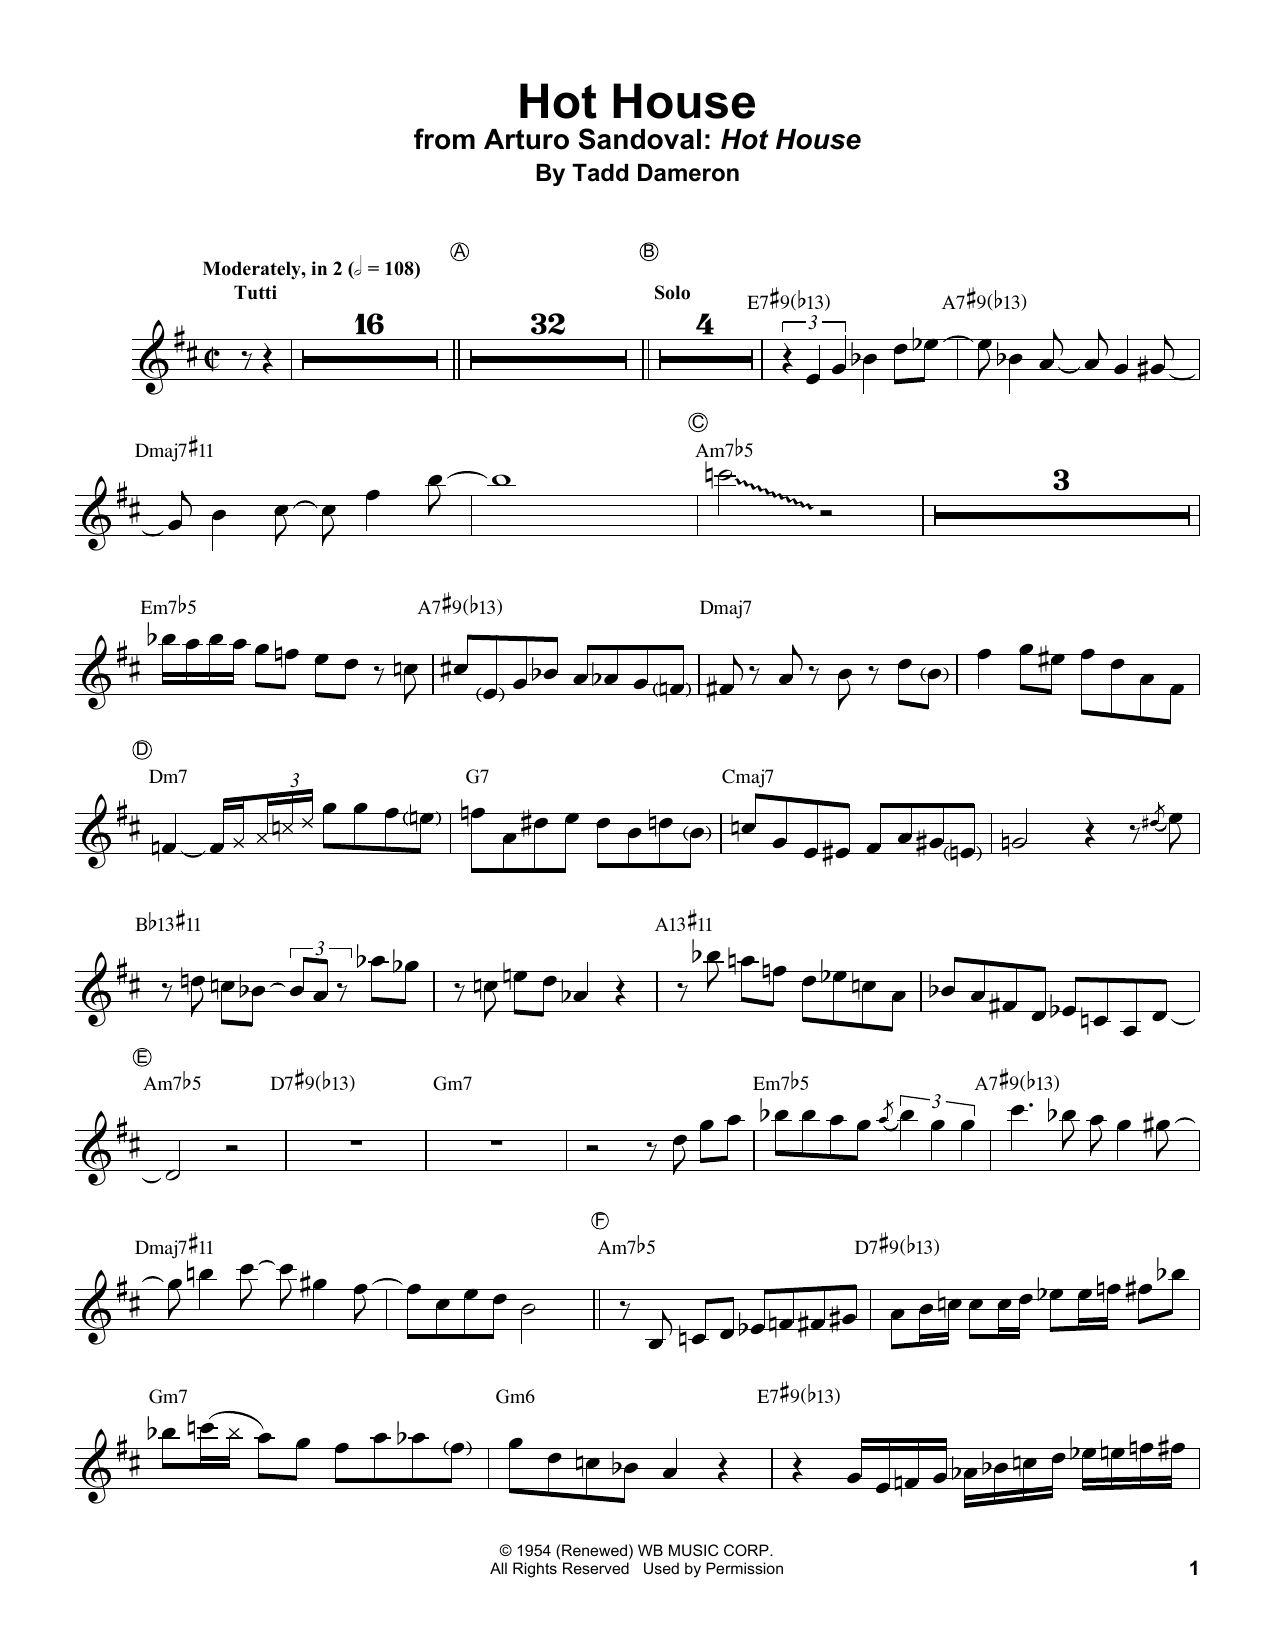 Arturo Sandoval Hot House Sheet Music Notes & Chords for Trumpet Transcription - Download or Print PDF